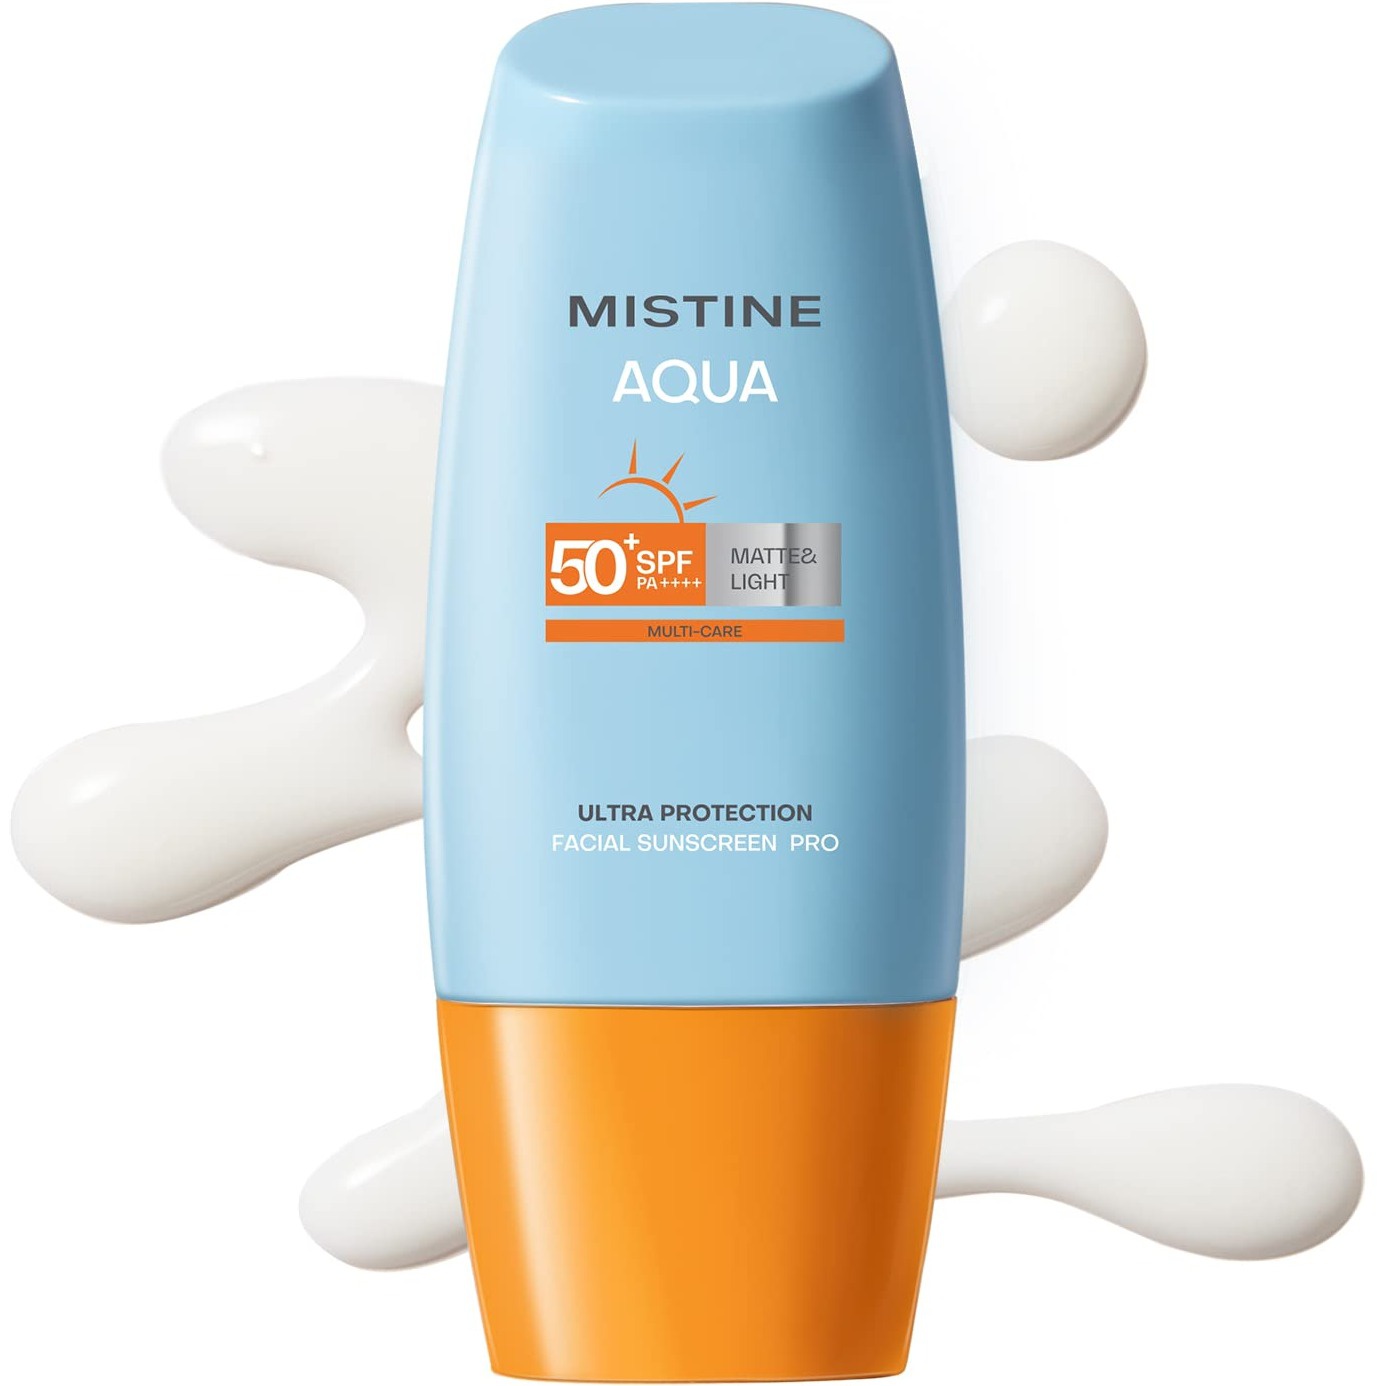 Mistine Aqua Base Ultra Protection Matte & Light Facial Sunscreen Pro SPF 50+ Pa++++